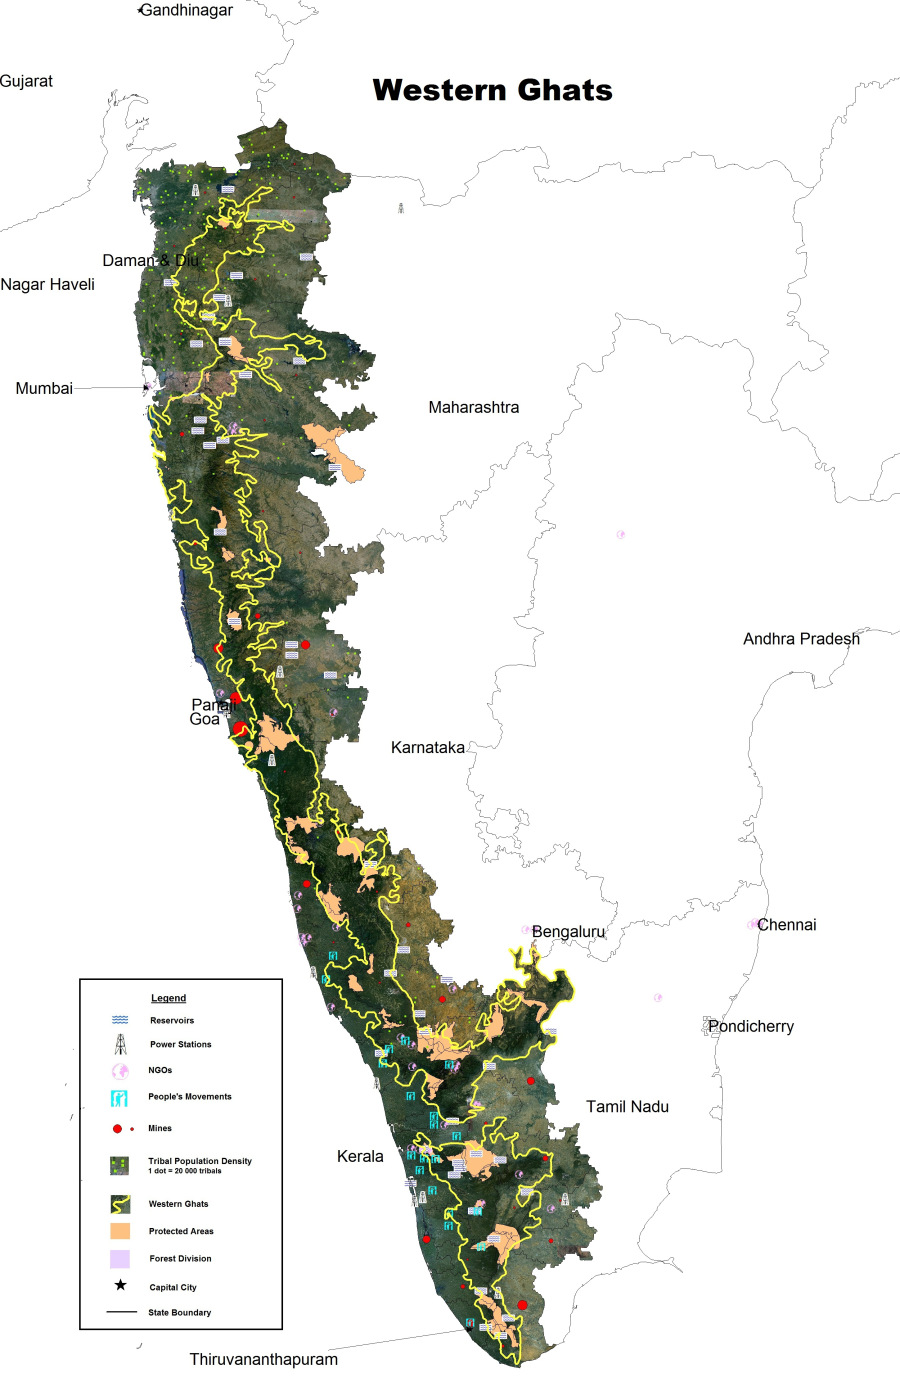 Western ghats spans across six states along the western coast of India - Maharashtra, Goa, Gujarat, Karnataka, Kerala and Tamil Nadu; Source: www.insightsonindia.com